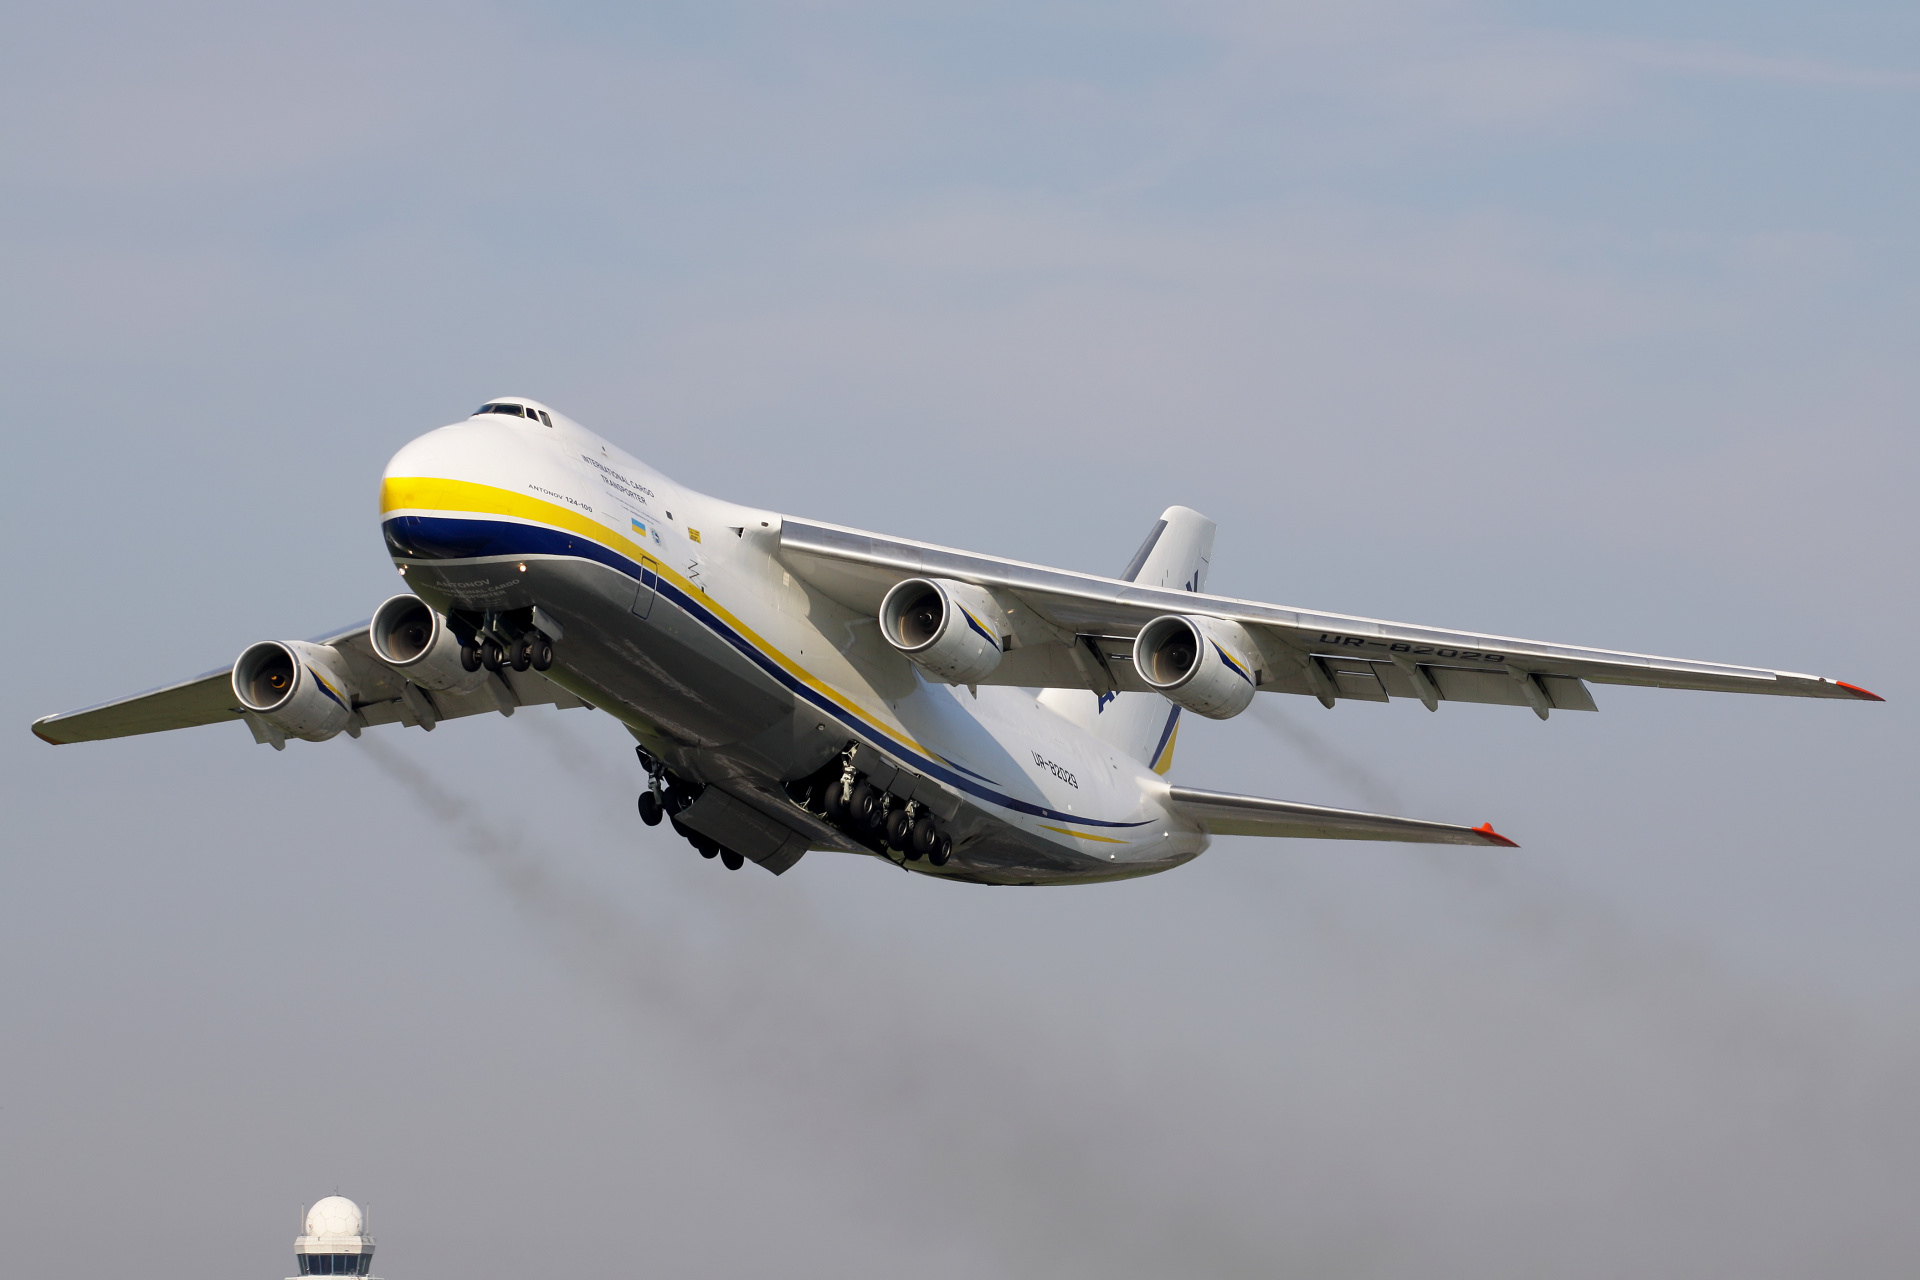 UR-82029 (new livery) (Aircraft » EPWA Spotting » Antonov An-124-100 Ruslan » Antonov Airlines)